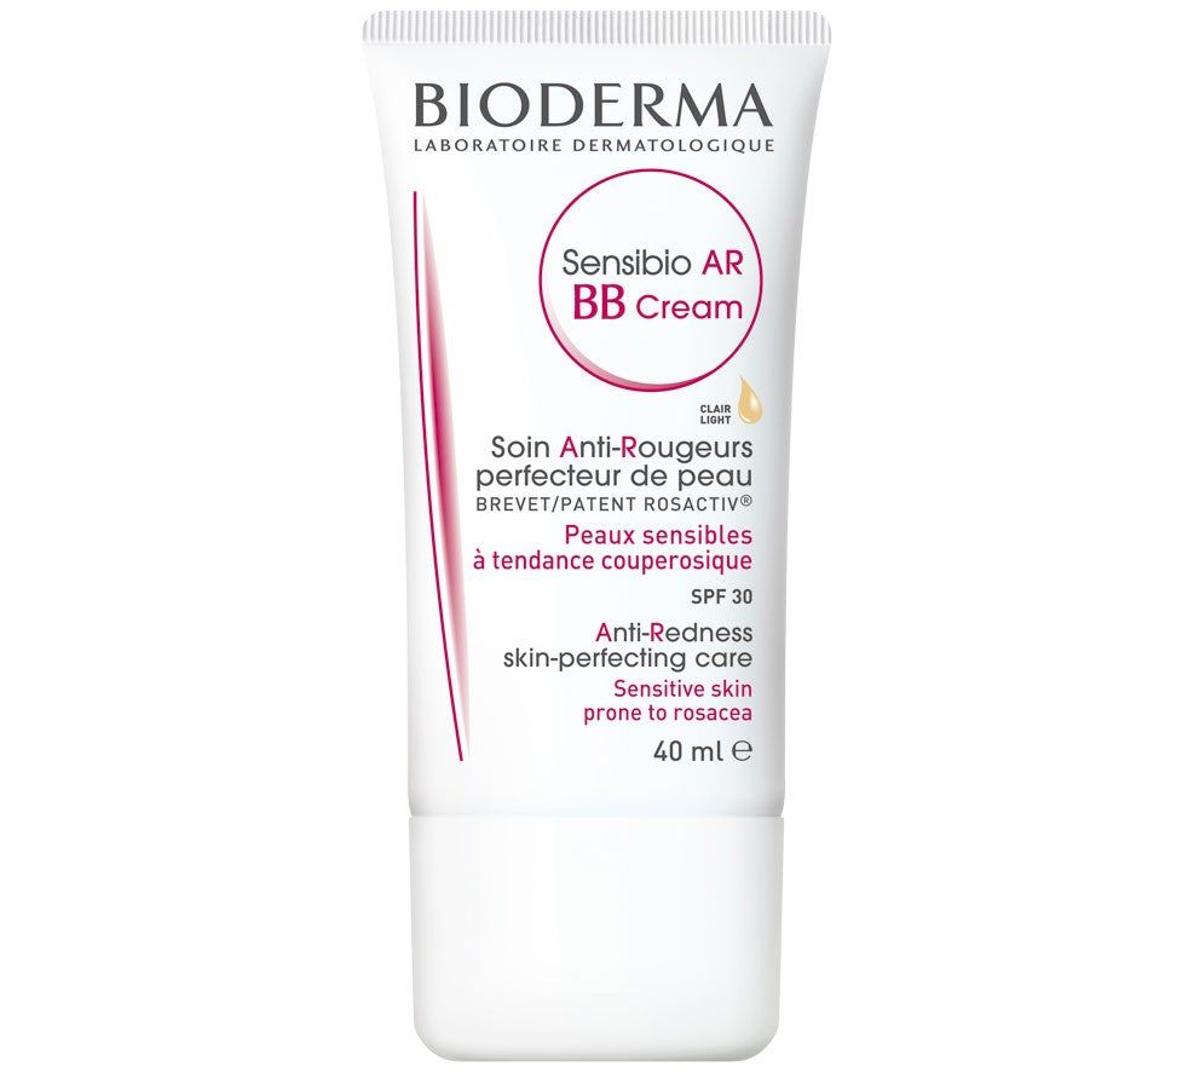 Sensibio AR BB Cream de Bioderma. (Precio: 19, 95 euros / 40 ml)